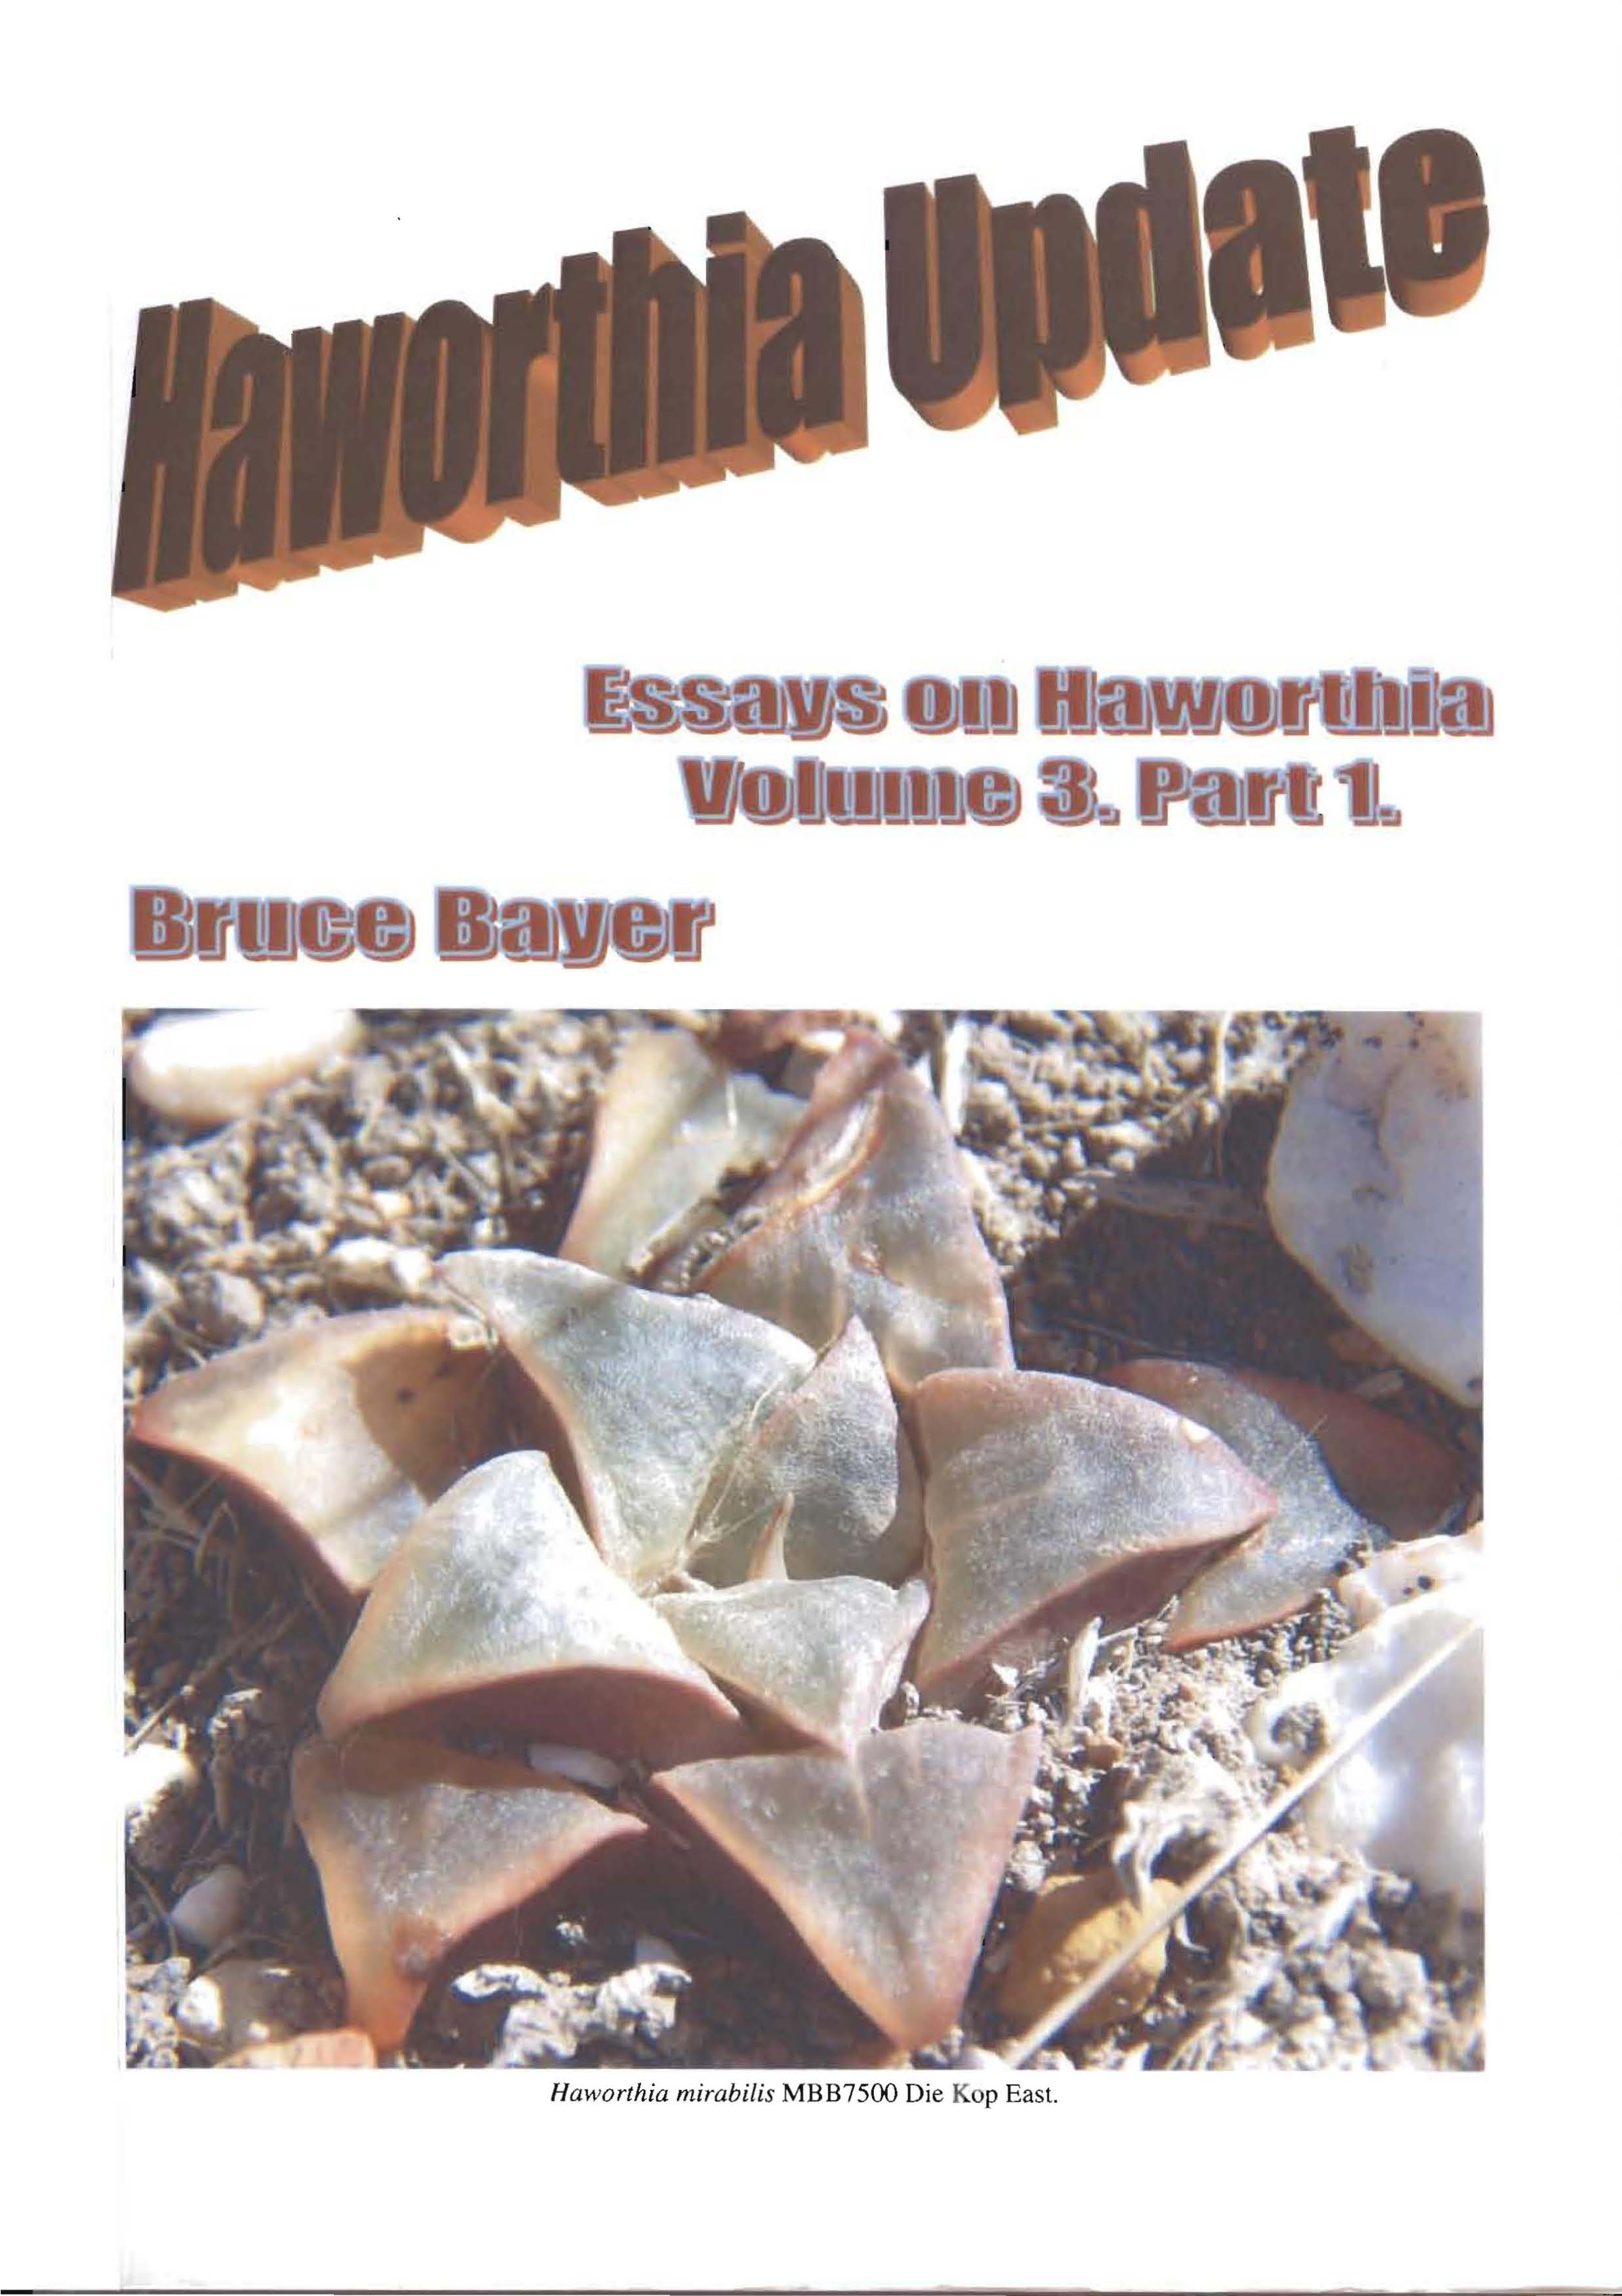 Haworthia Updates vol. 3